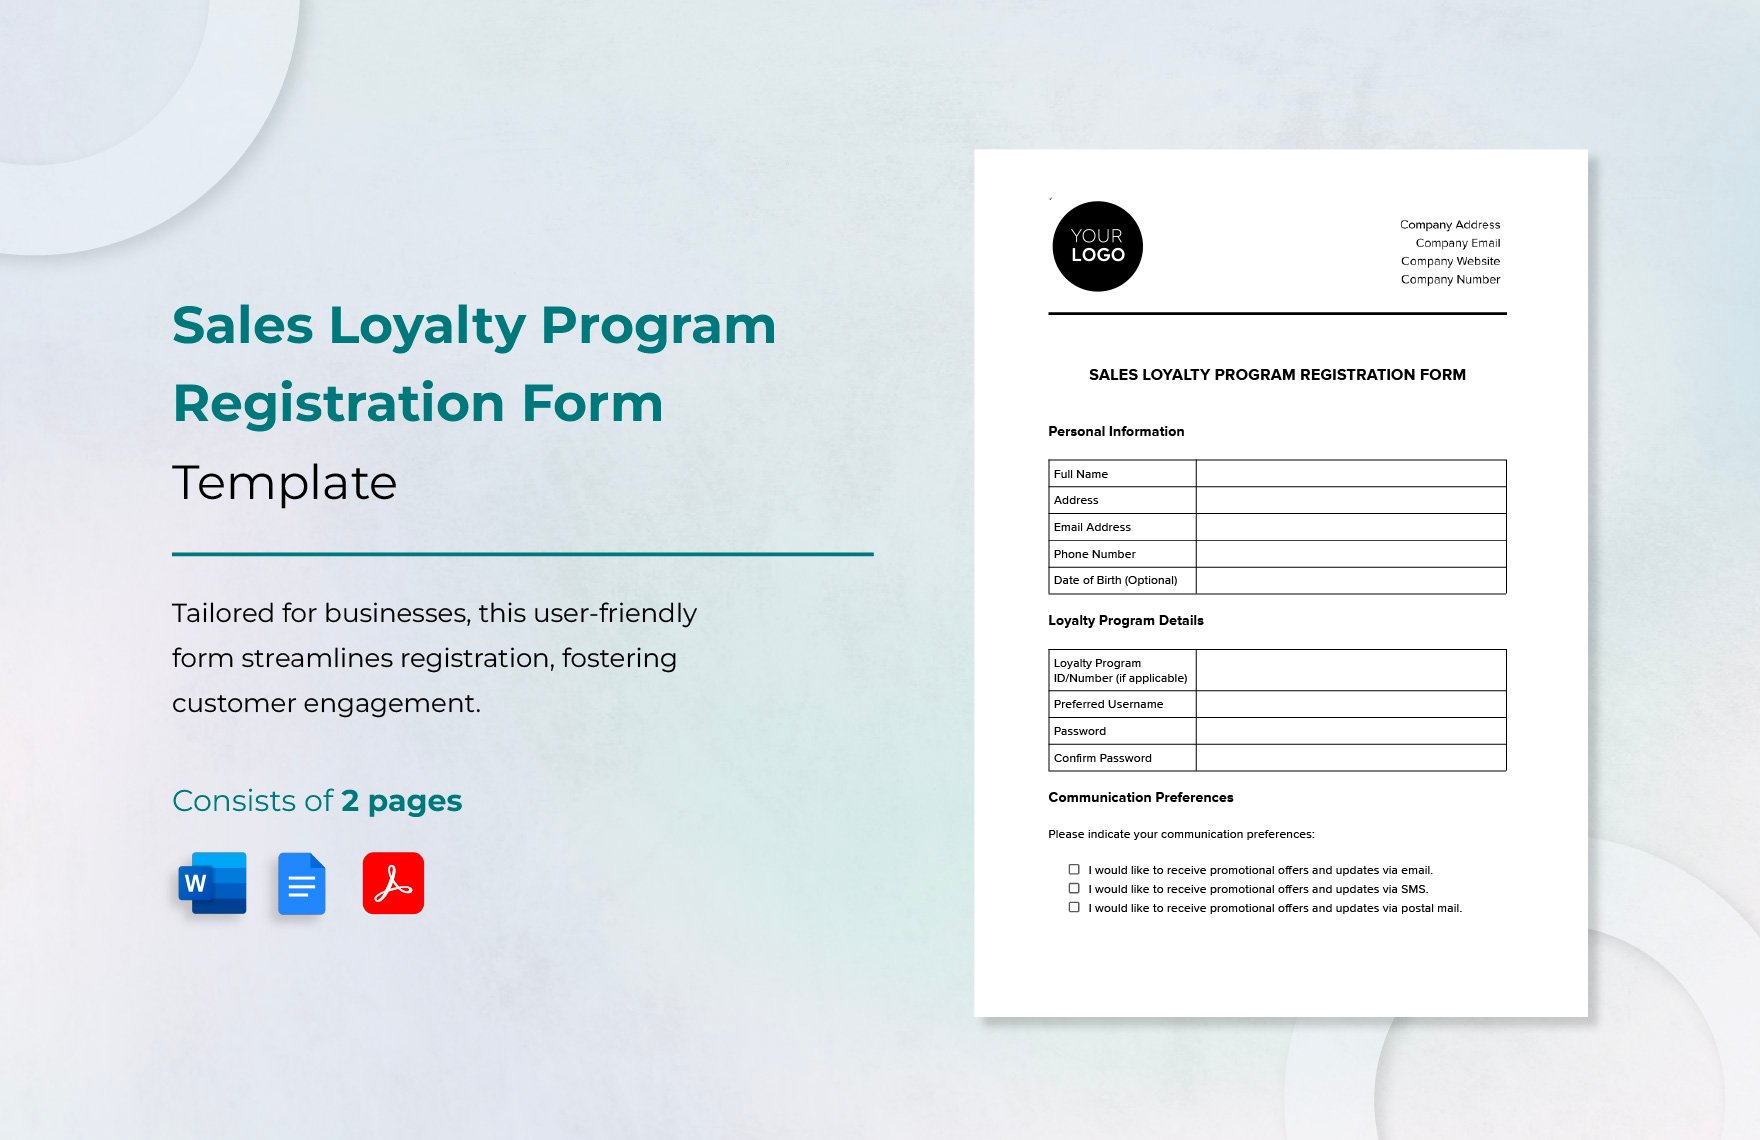 Sales Loyalty Program Registration Form Template in Word, Google Docs, PDF